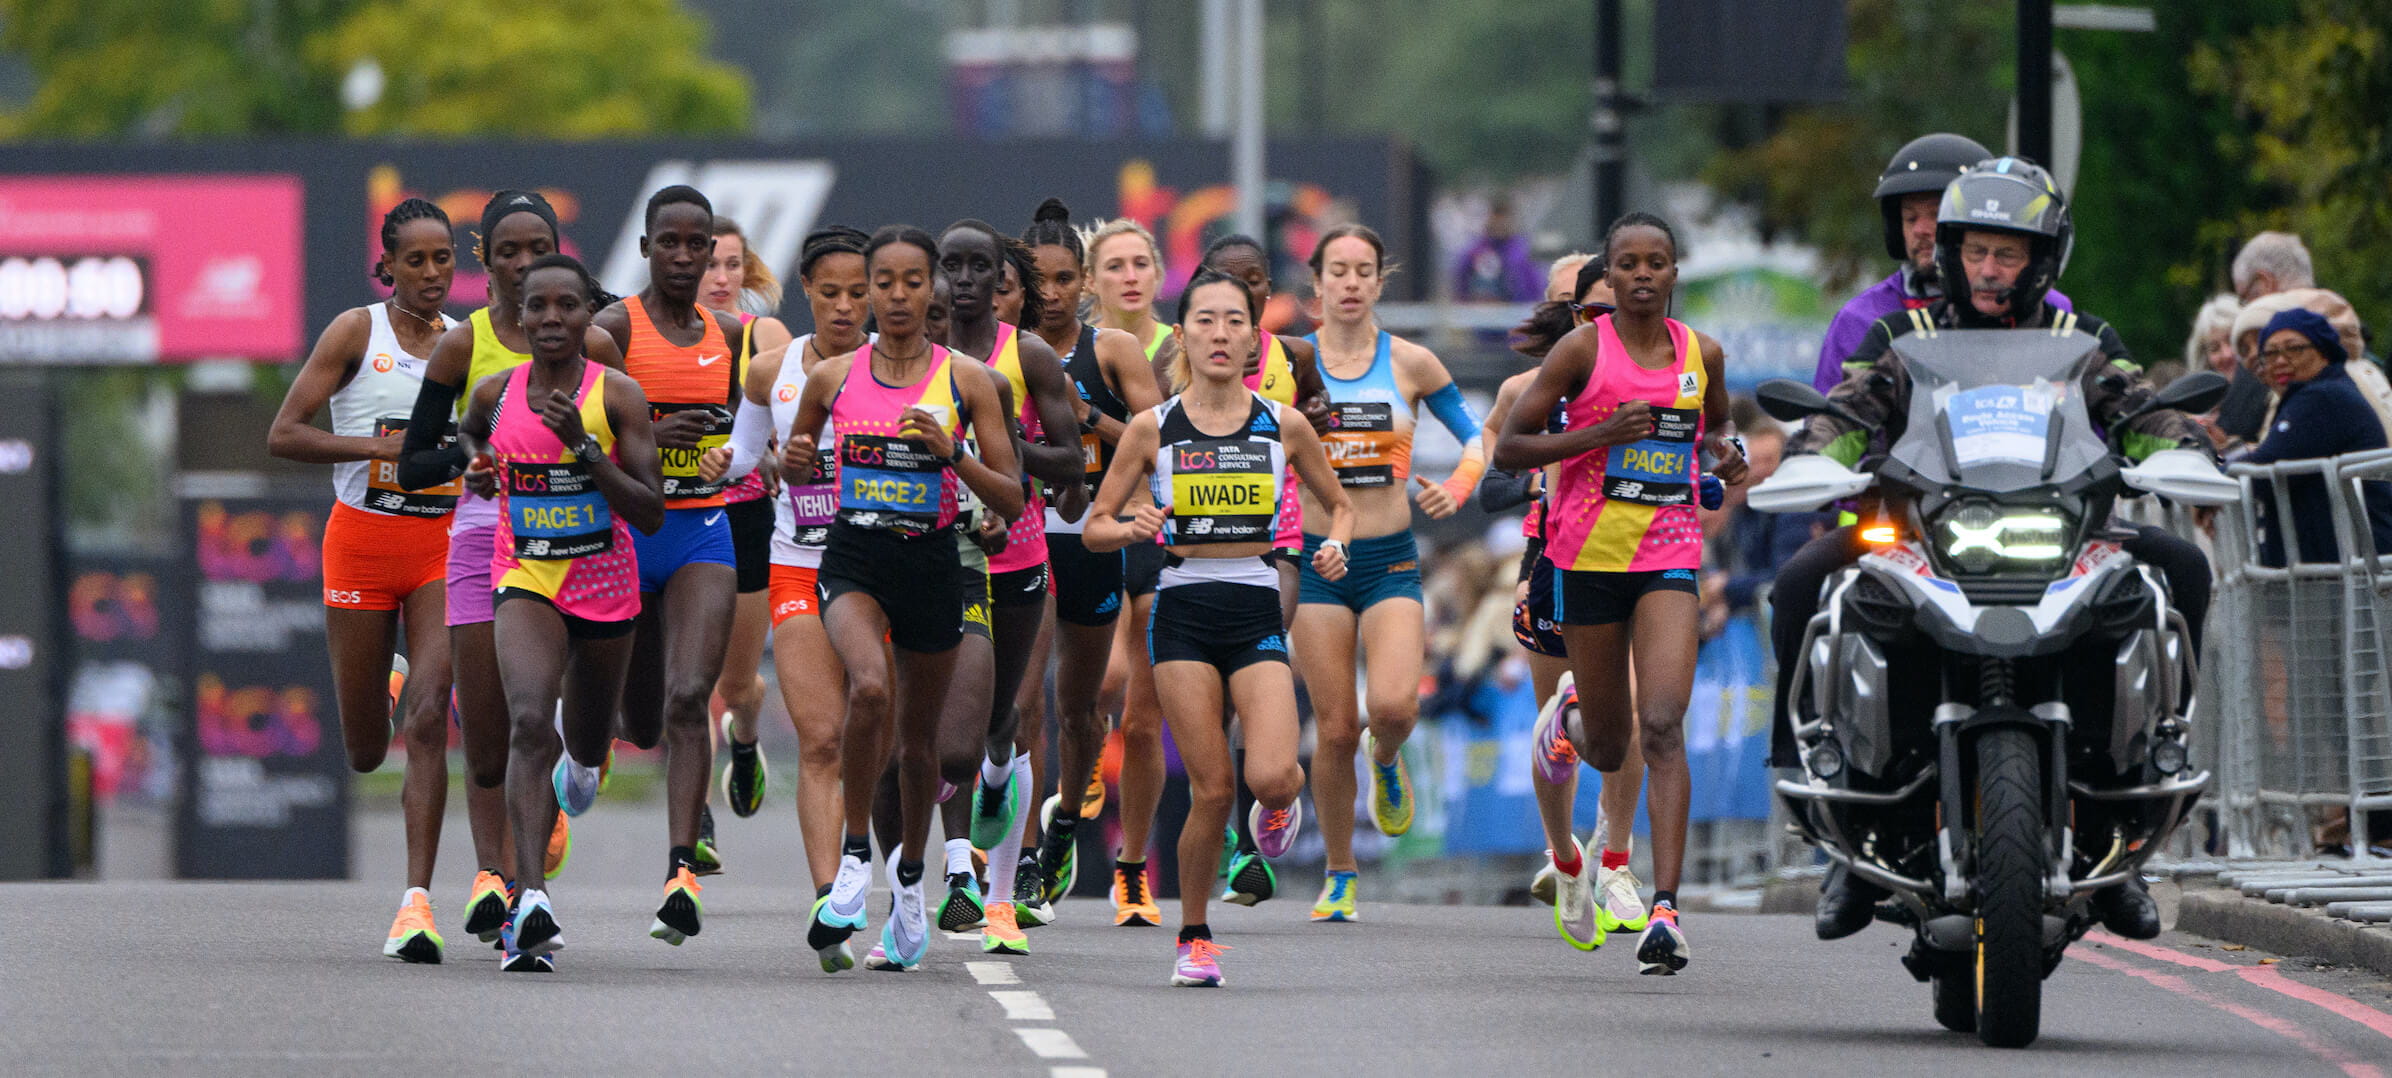 The elite women near the Start Line of the TCS London Marathon